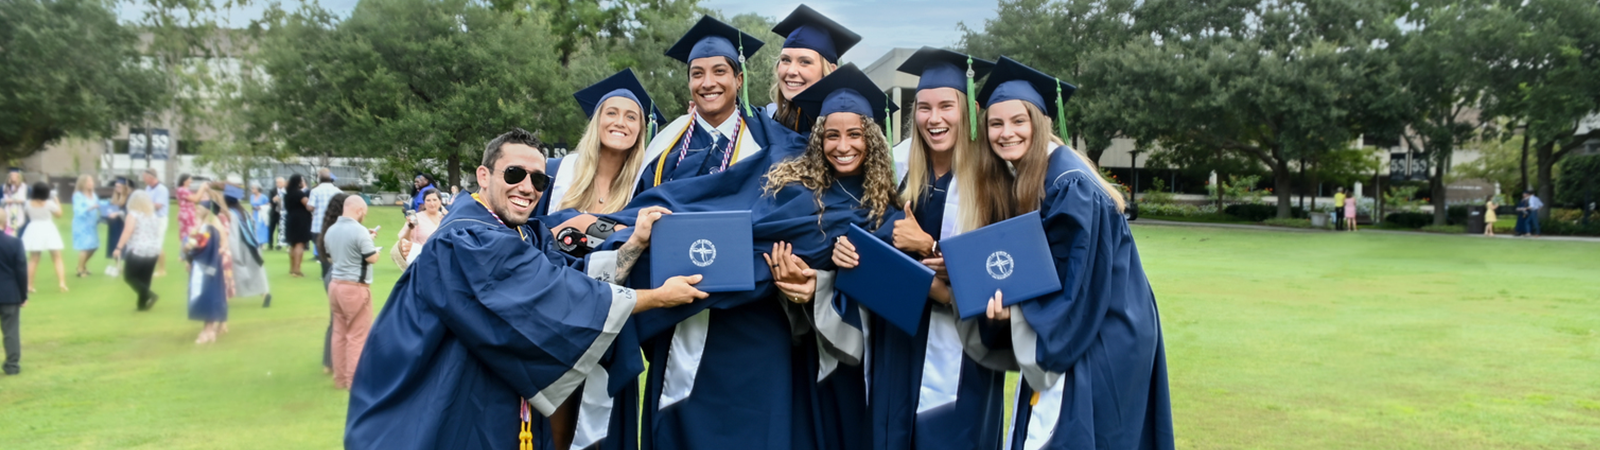 group of graduates holding up a dipolma